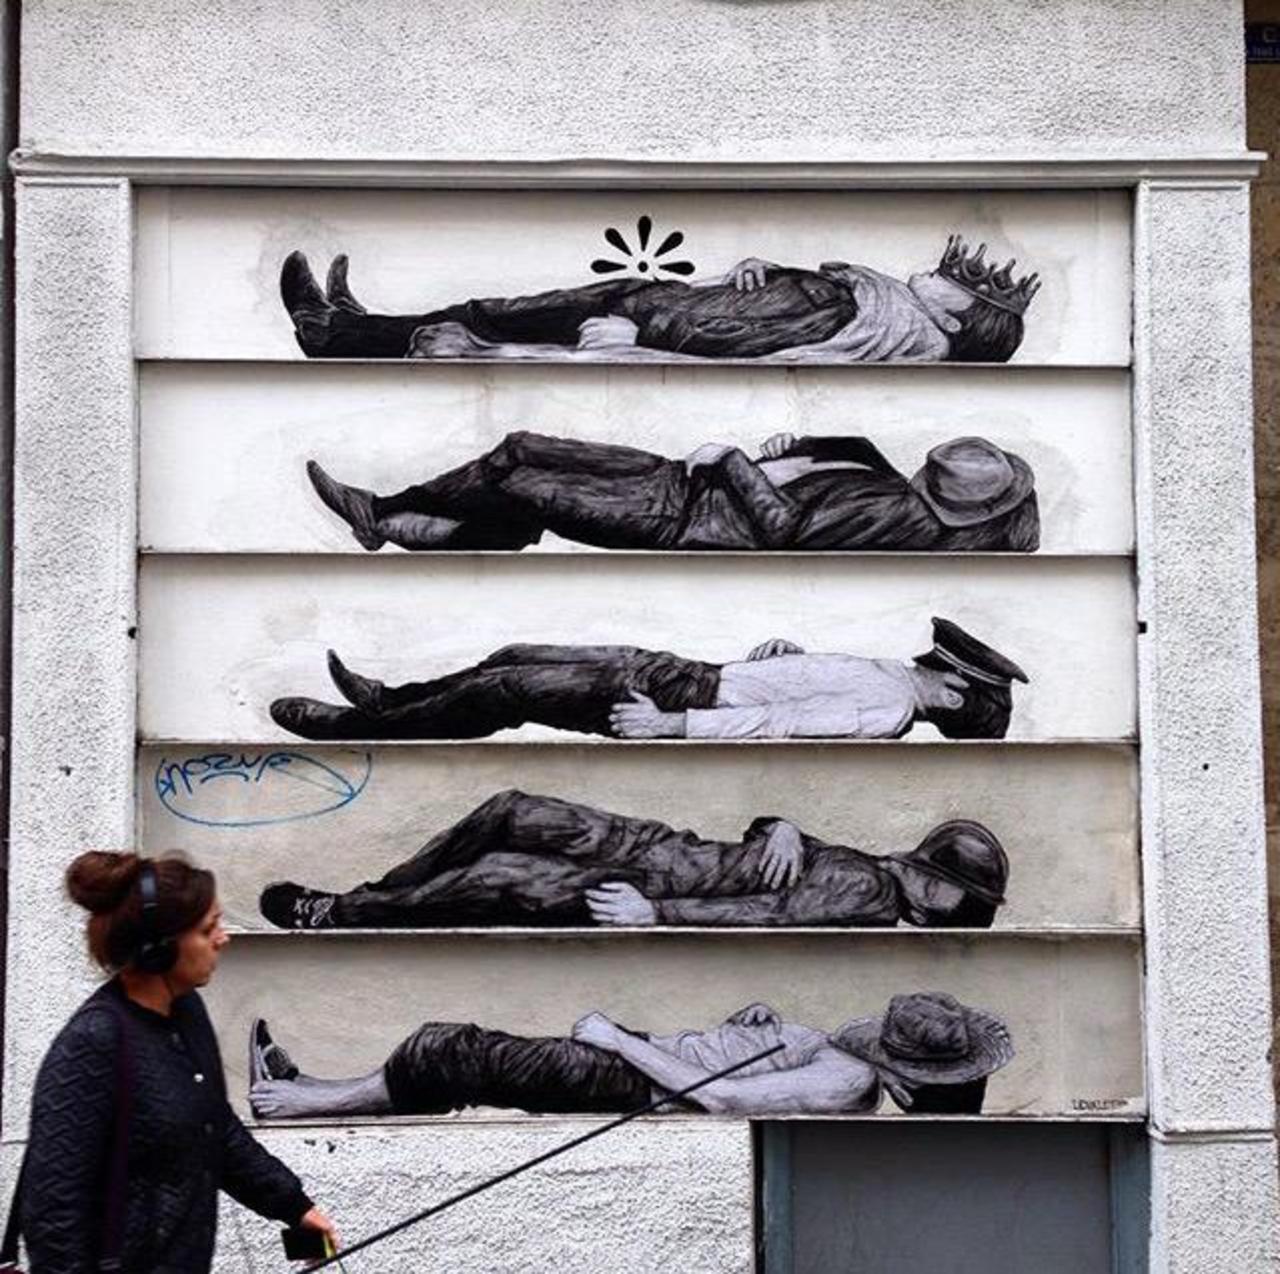 Levalet 
L'ordre des choses - Paris XIX
#art #mural #graffiti #streetart http://t.co/A5gtv3sNxa
Via @GoogleStreetArt